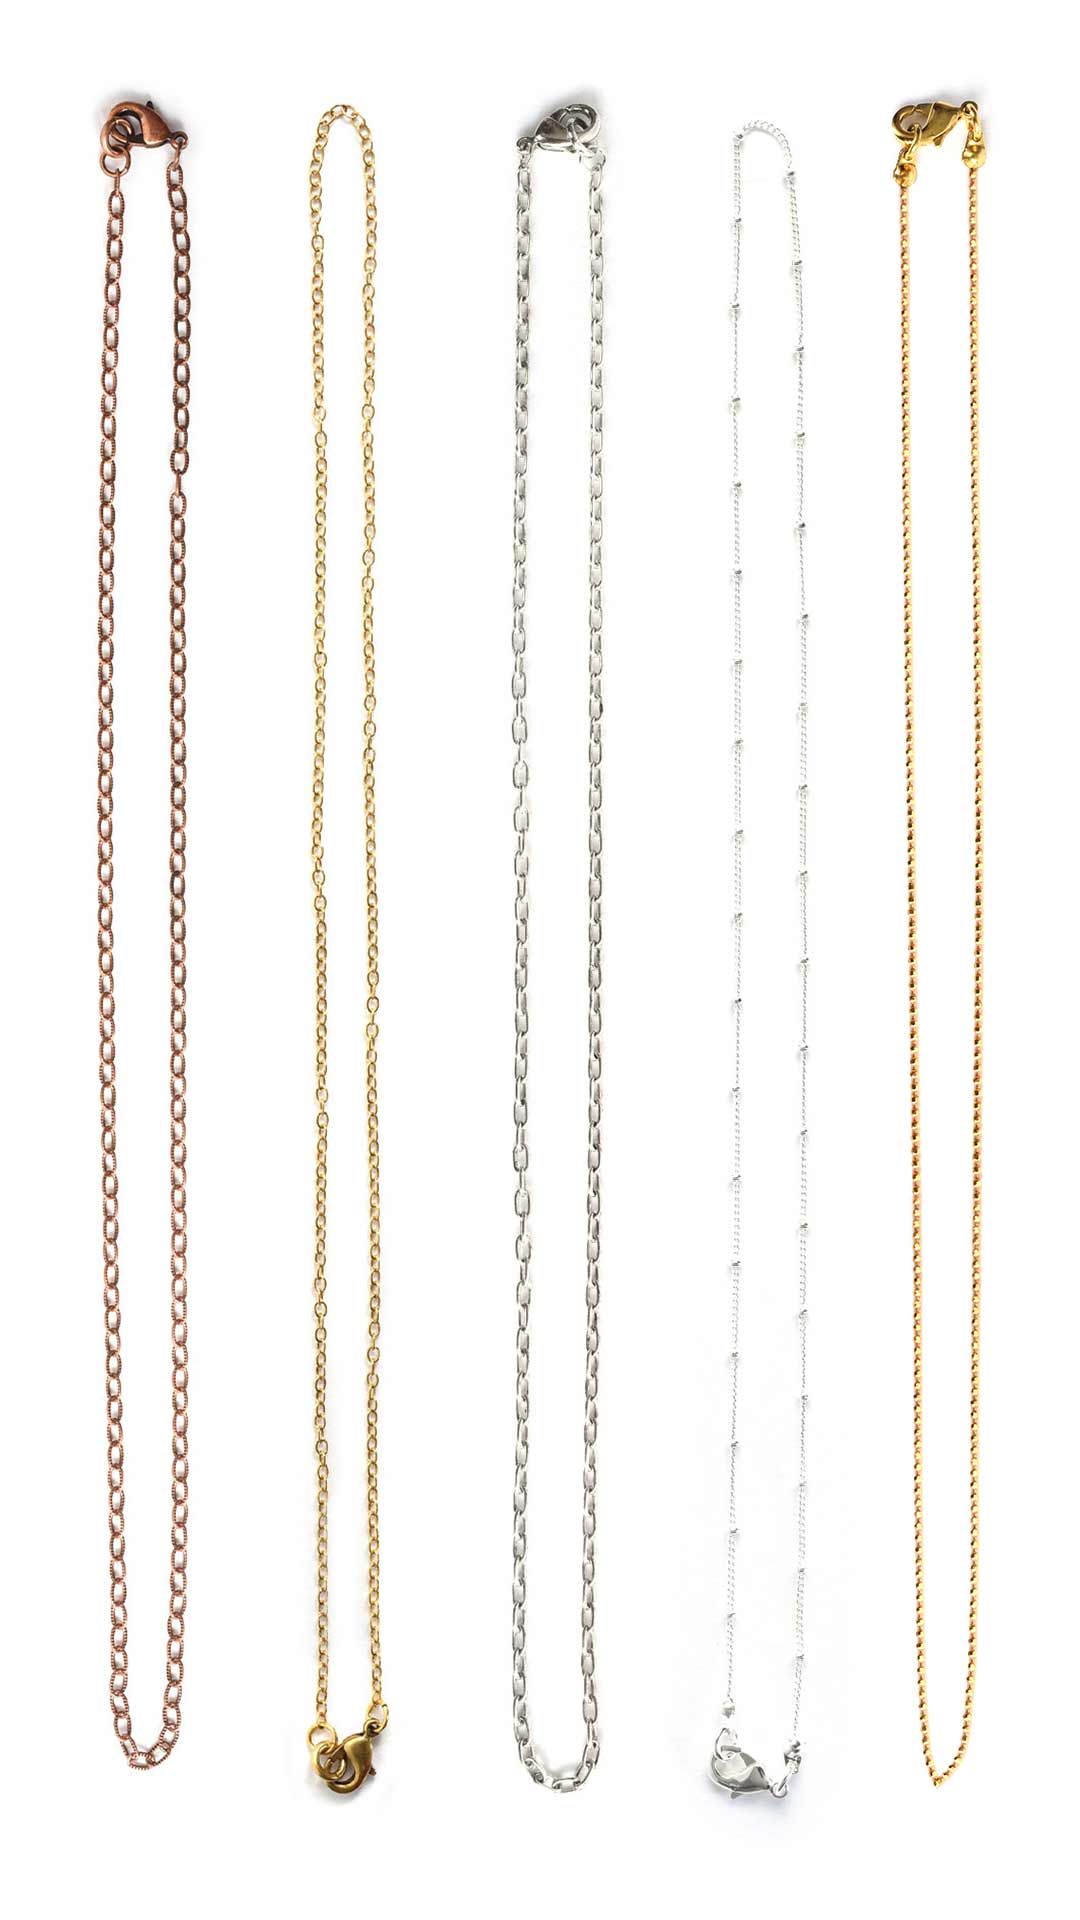 all 5 assembled necklaces l